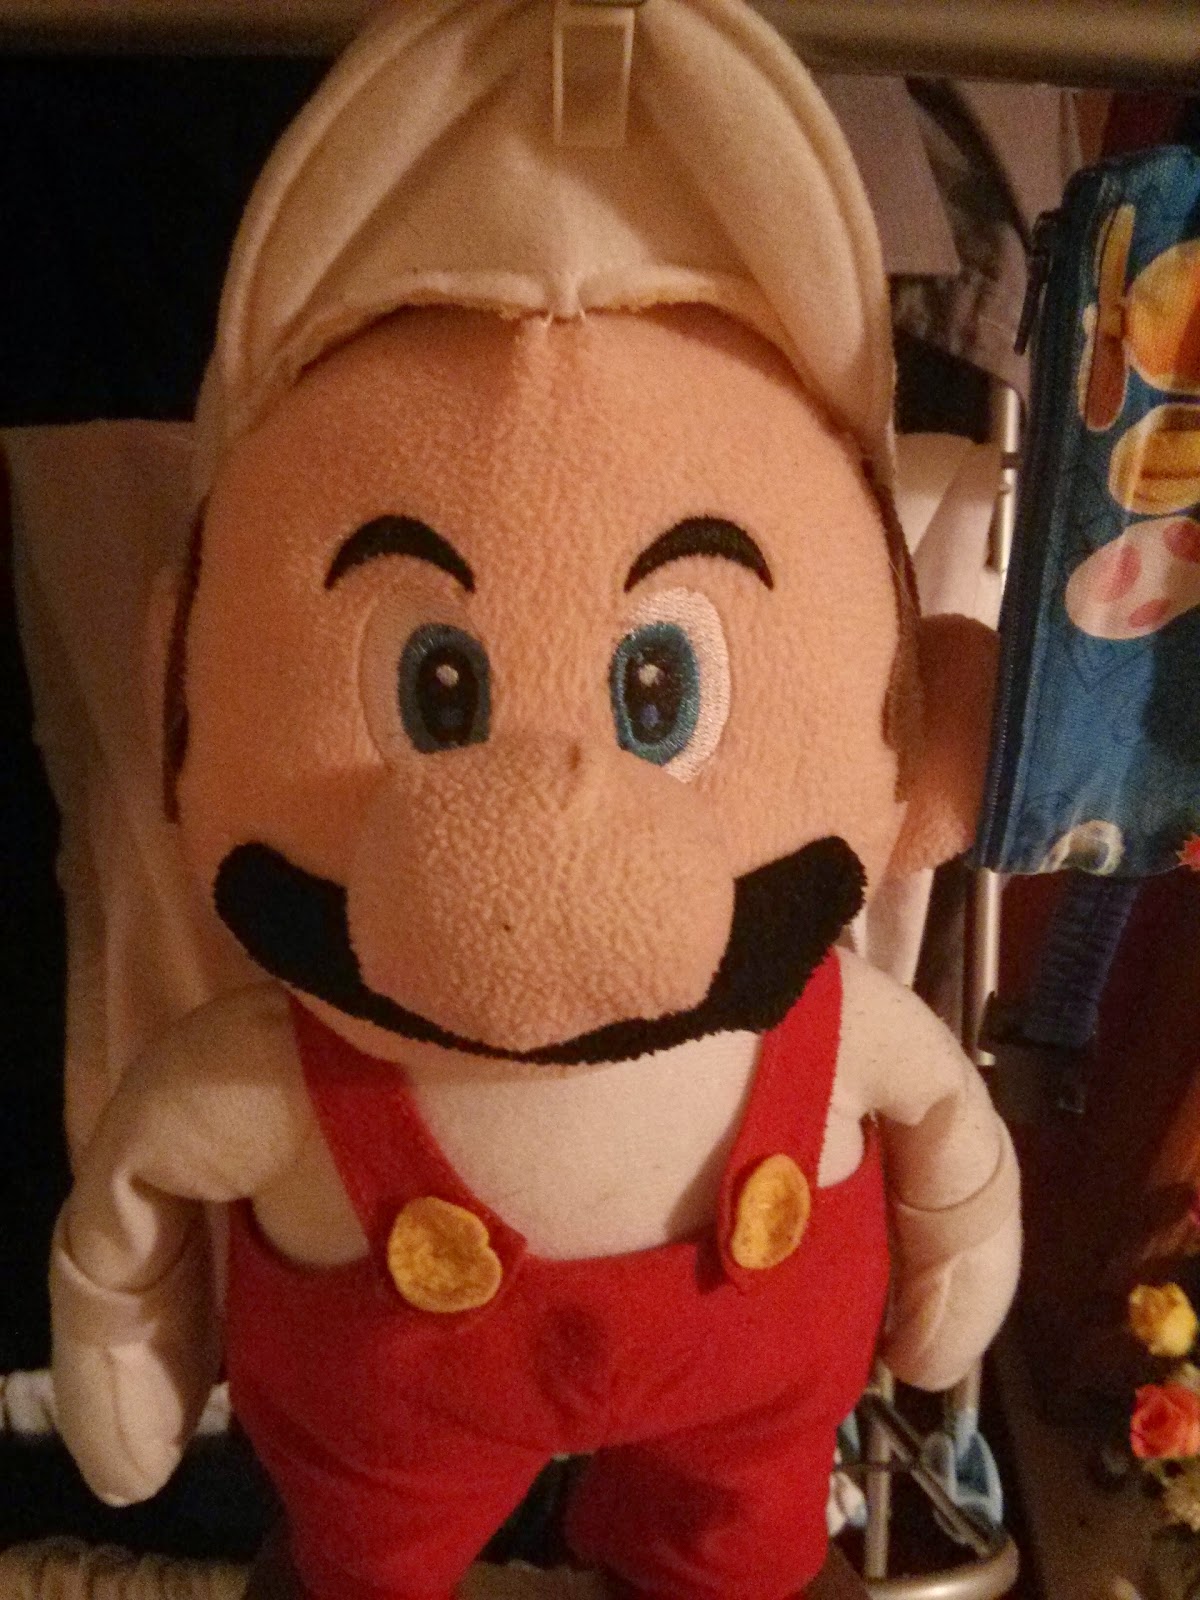 Mario drying off